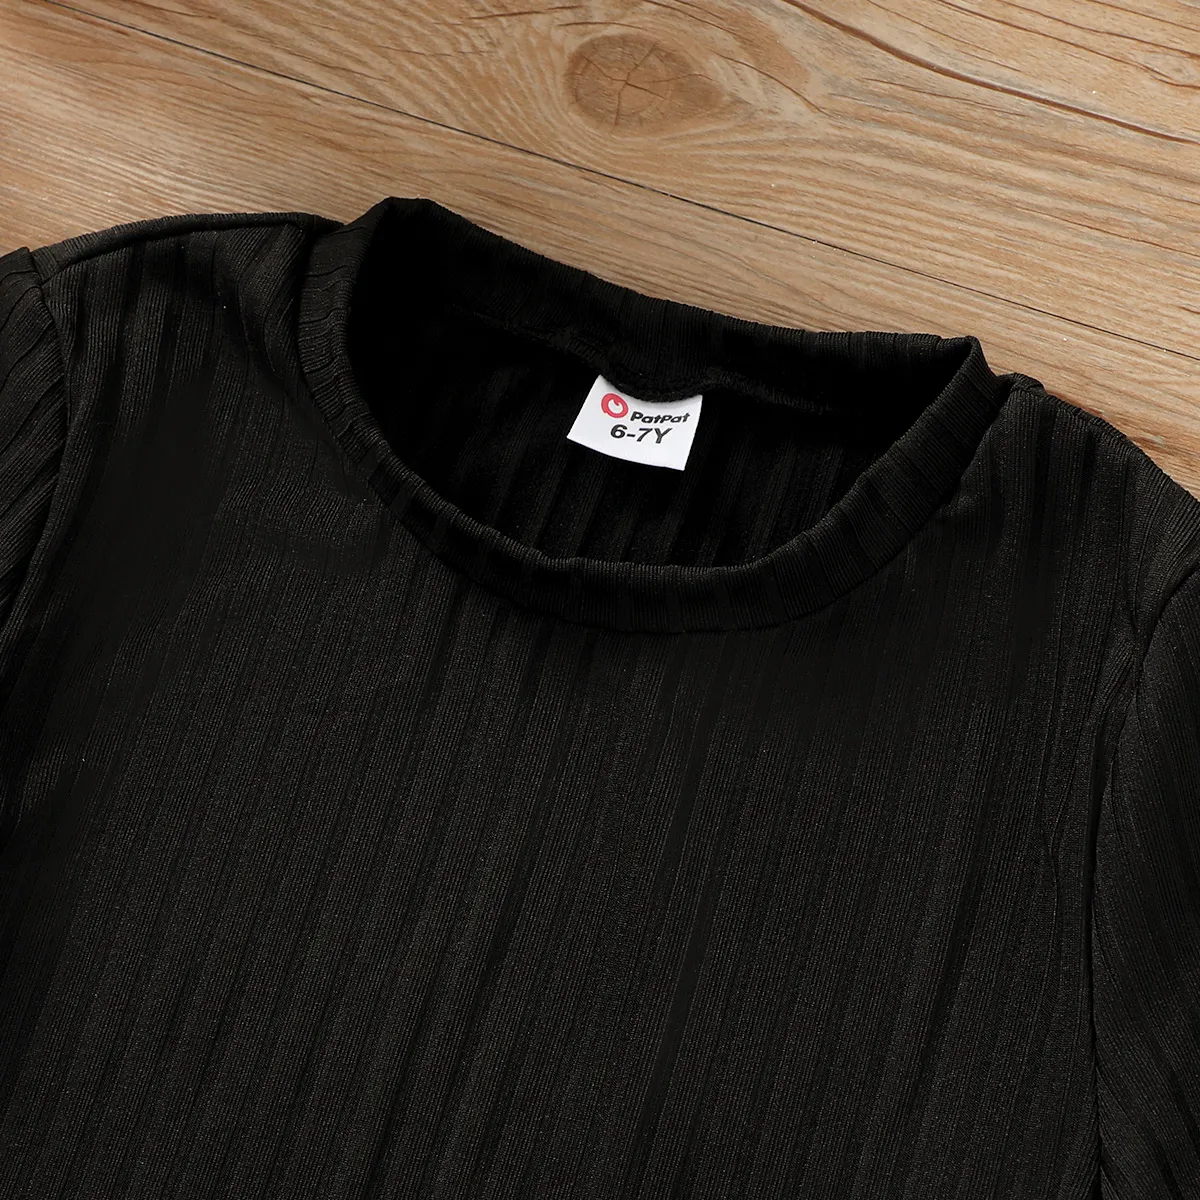 Kinder Mädchen Gekräuselter Saum Unifarben Kurzärmelig T-Shirts schwarz big image 1